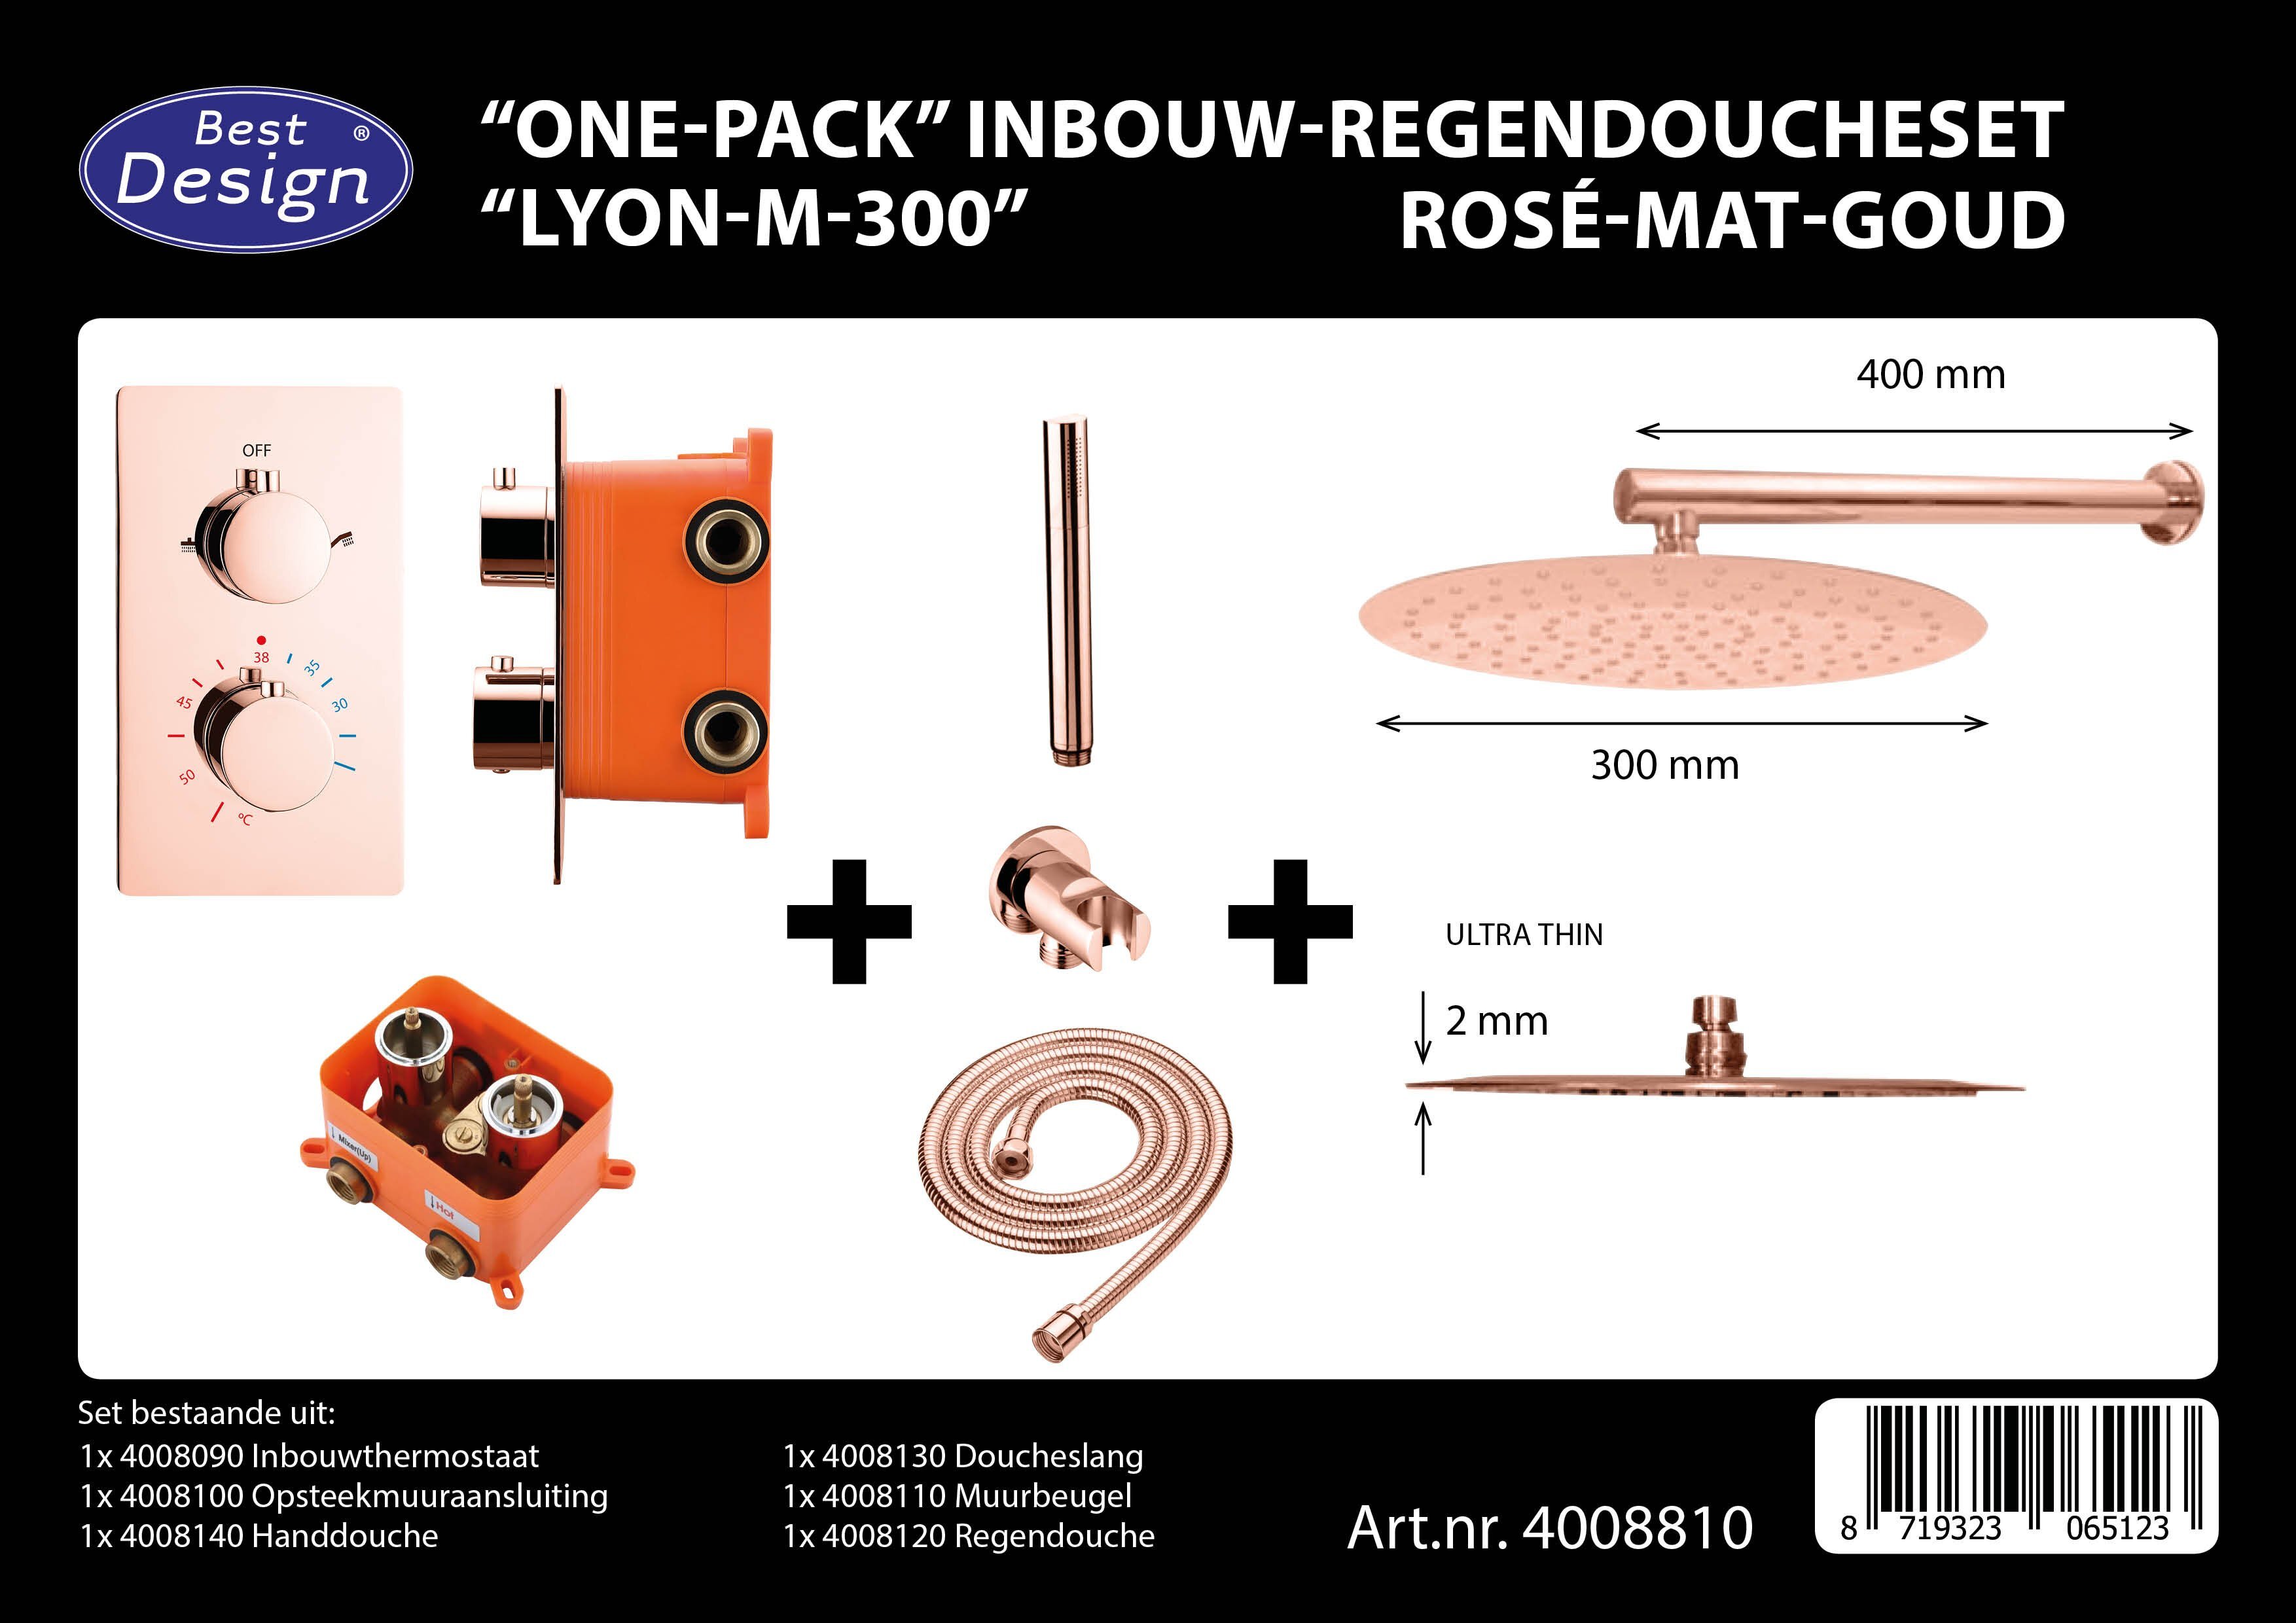 Best Design Regendouche Best-Design "One-Pack" inbouw-t "Lyon-M-300" Rose mat goud